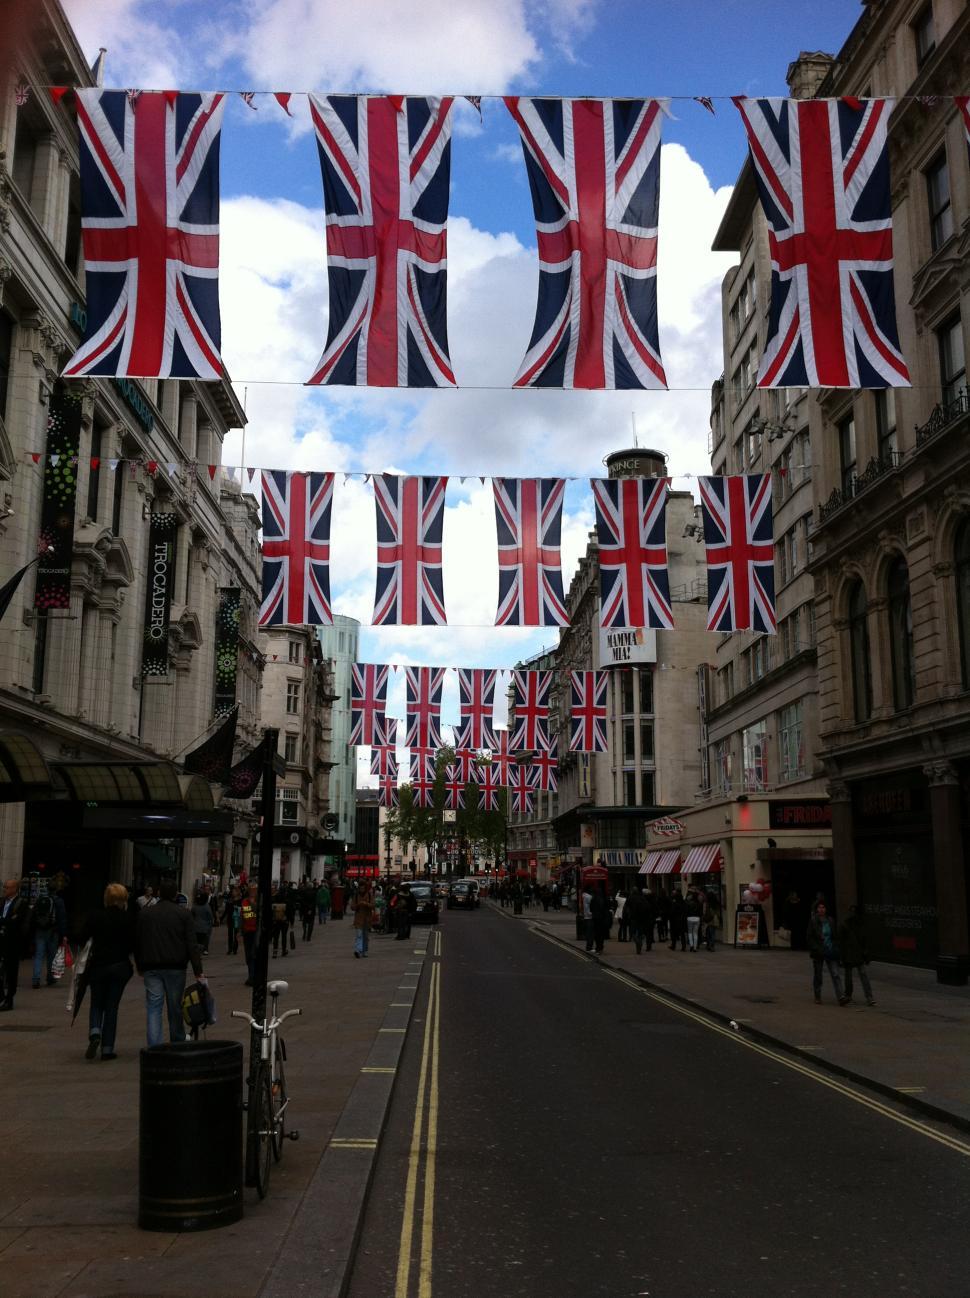 Free Image of London 2012 